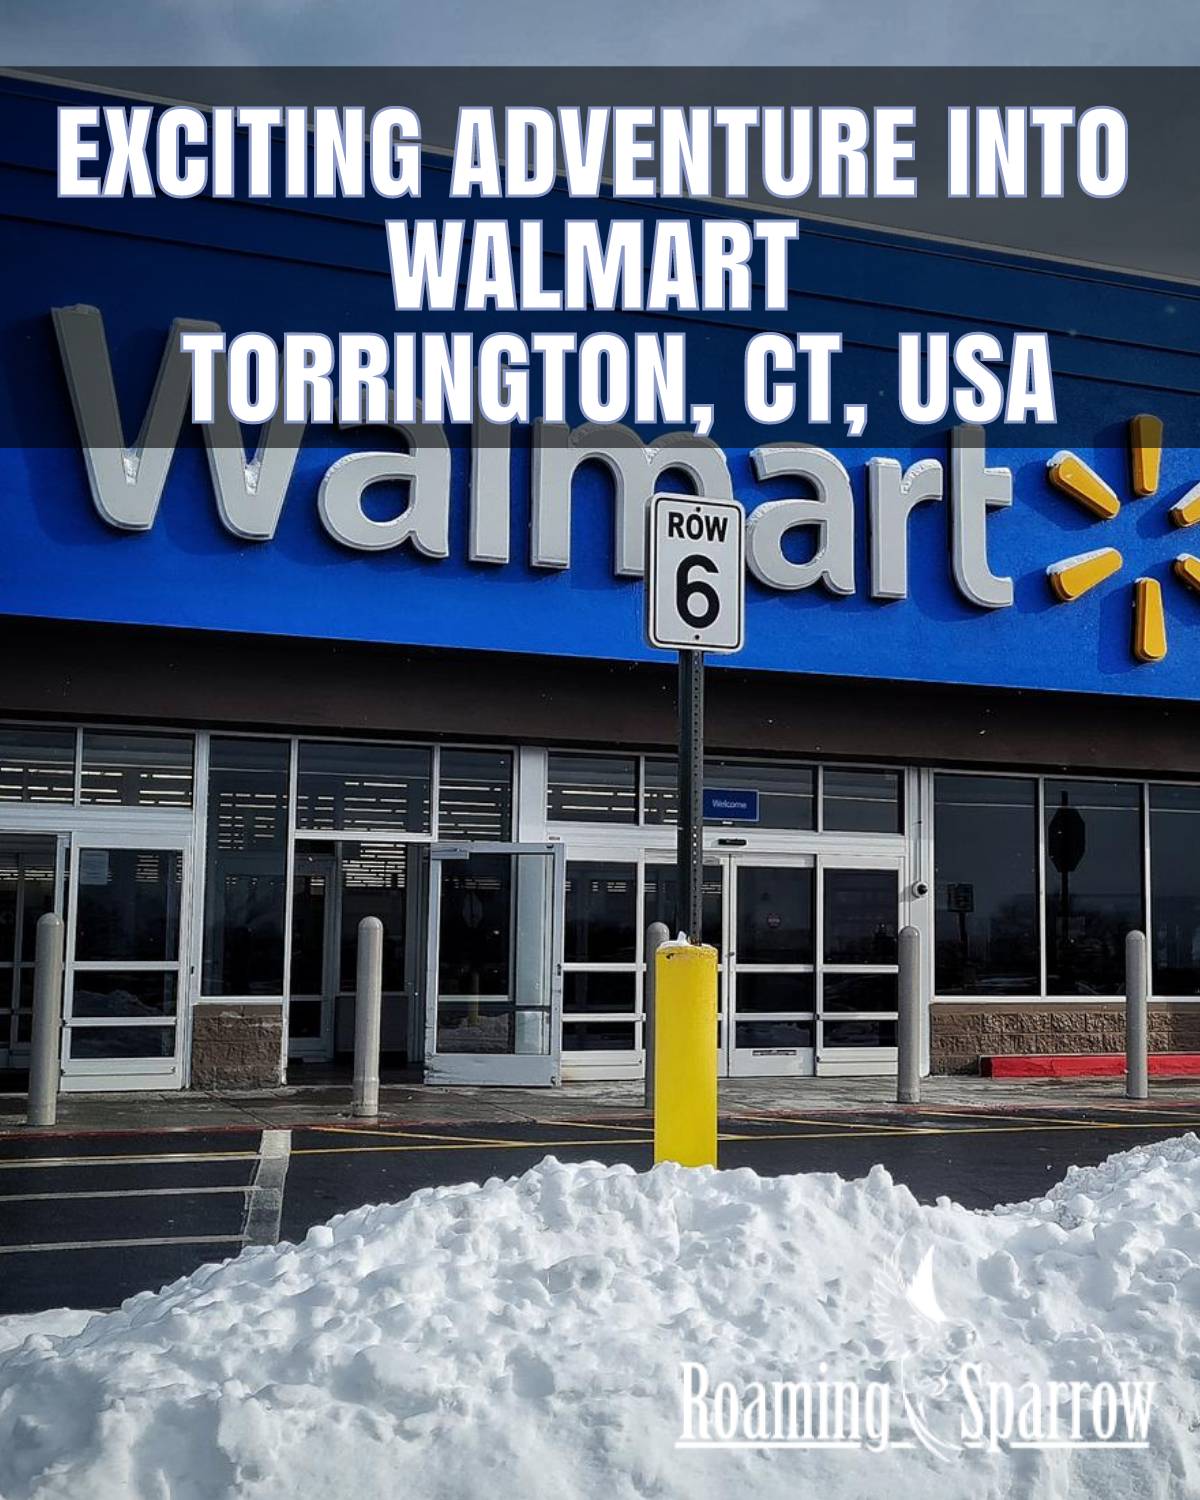 Exciting adventure into Walmart - Torrington, CT, USA